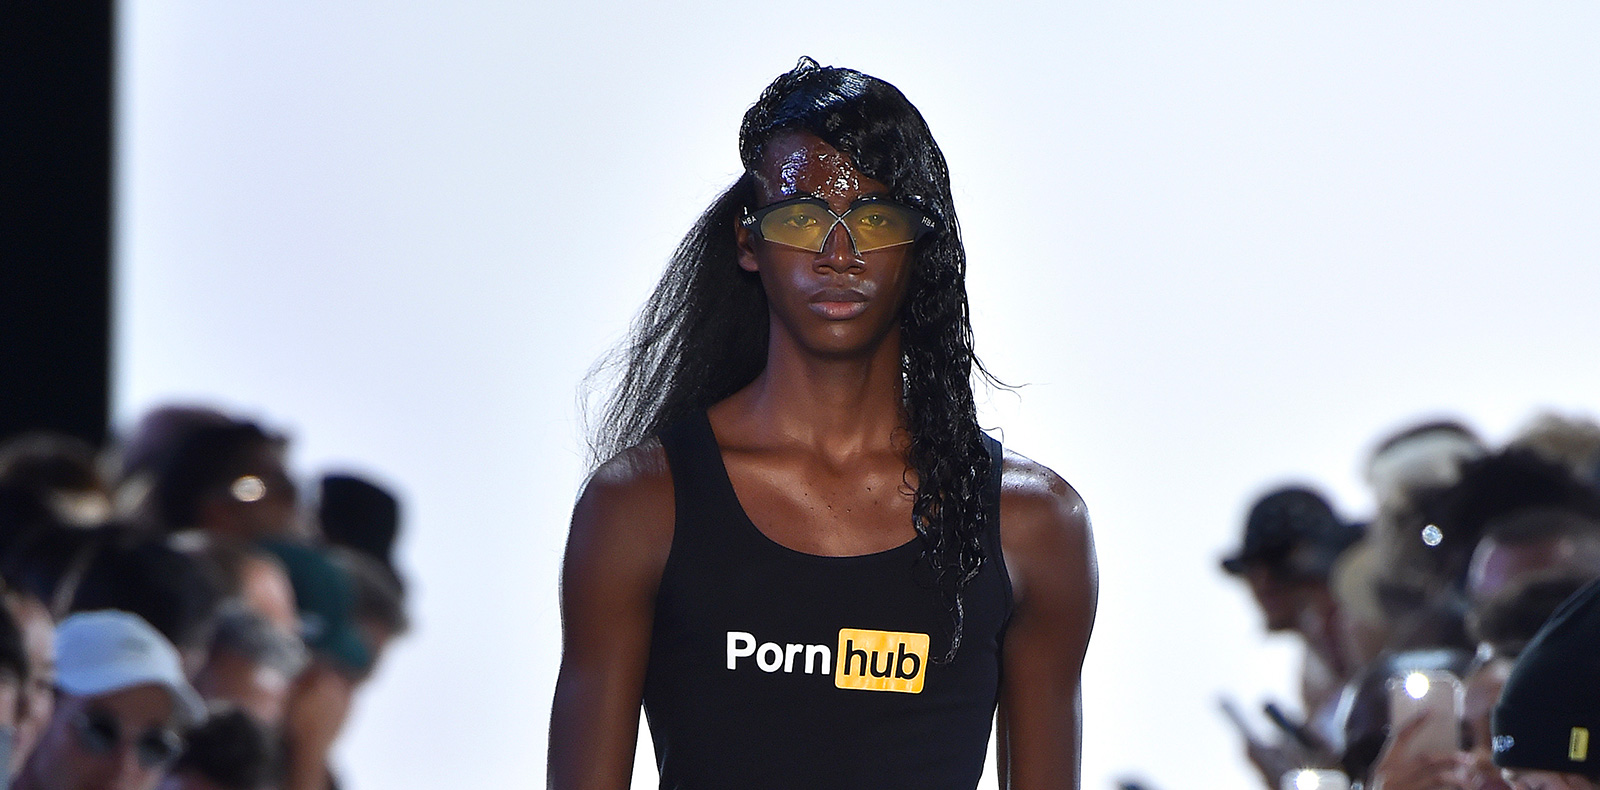 shayne Oliver show fashion porn hub hood by